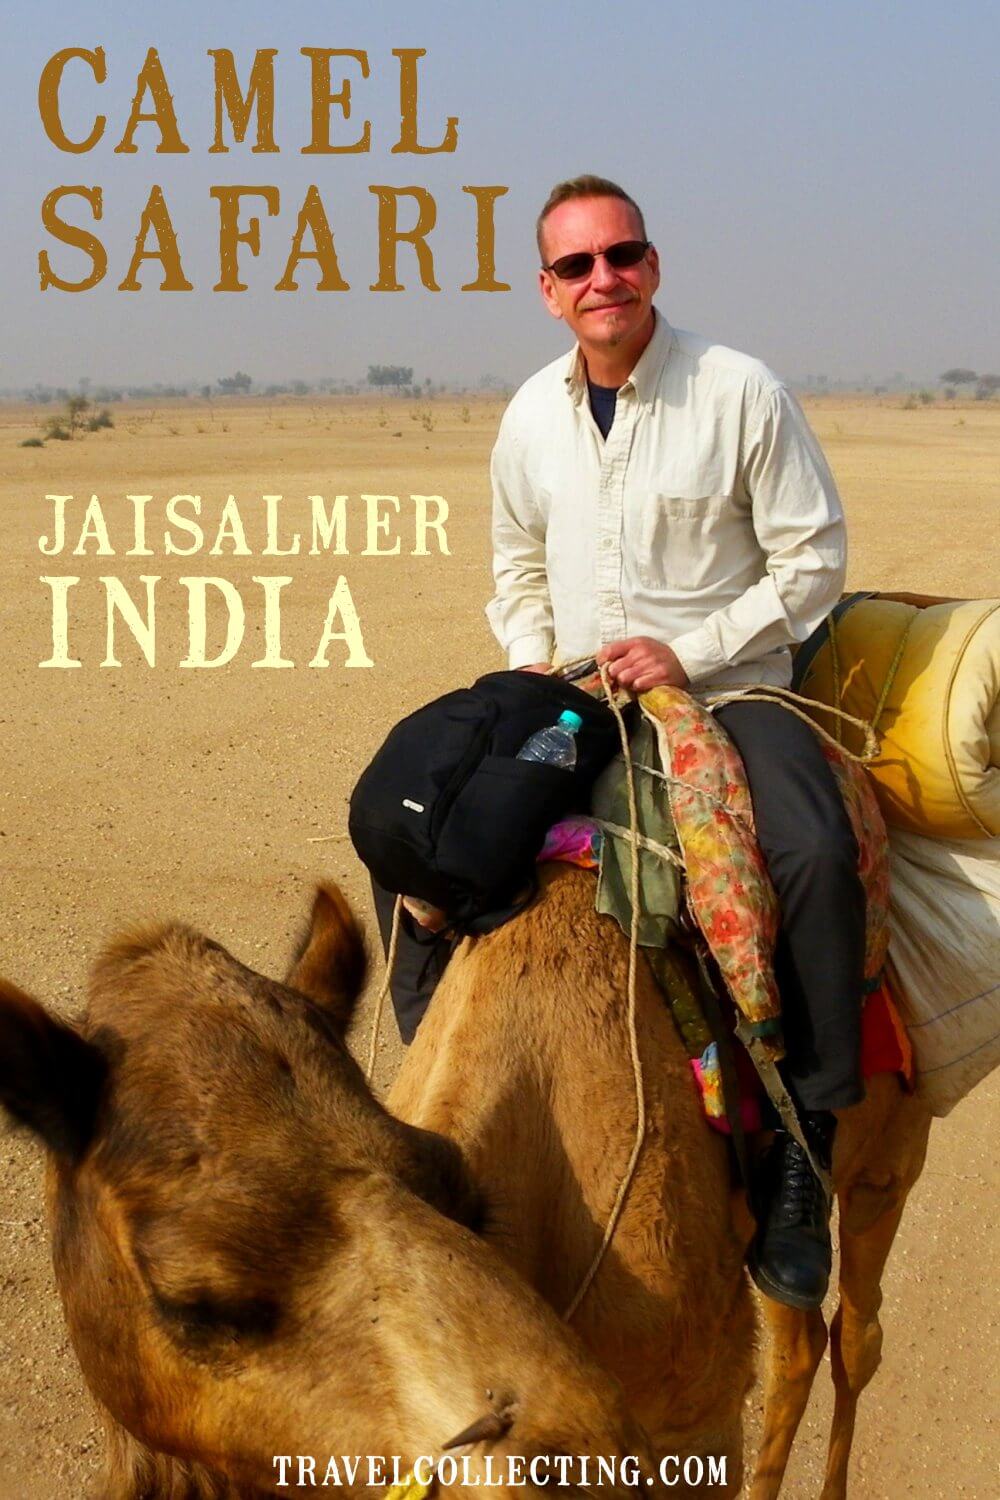 camel safari jaisalmer india pinterest